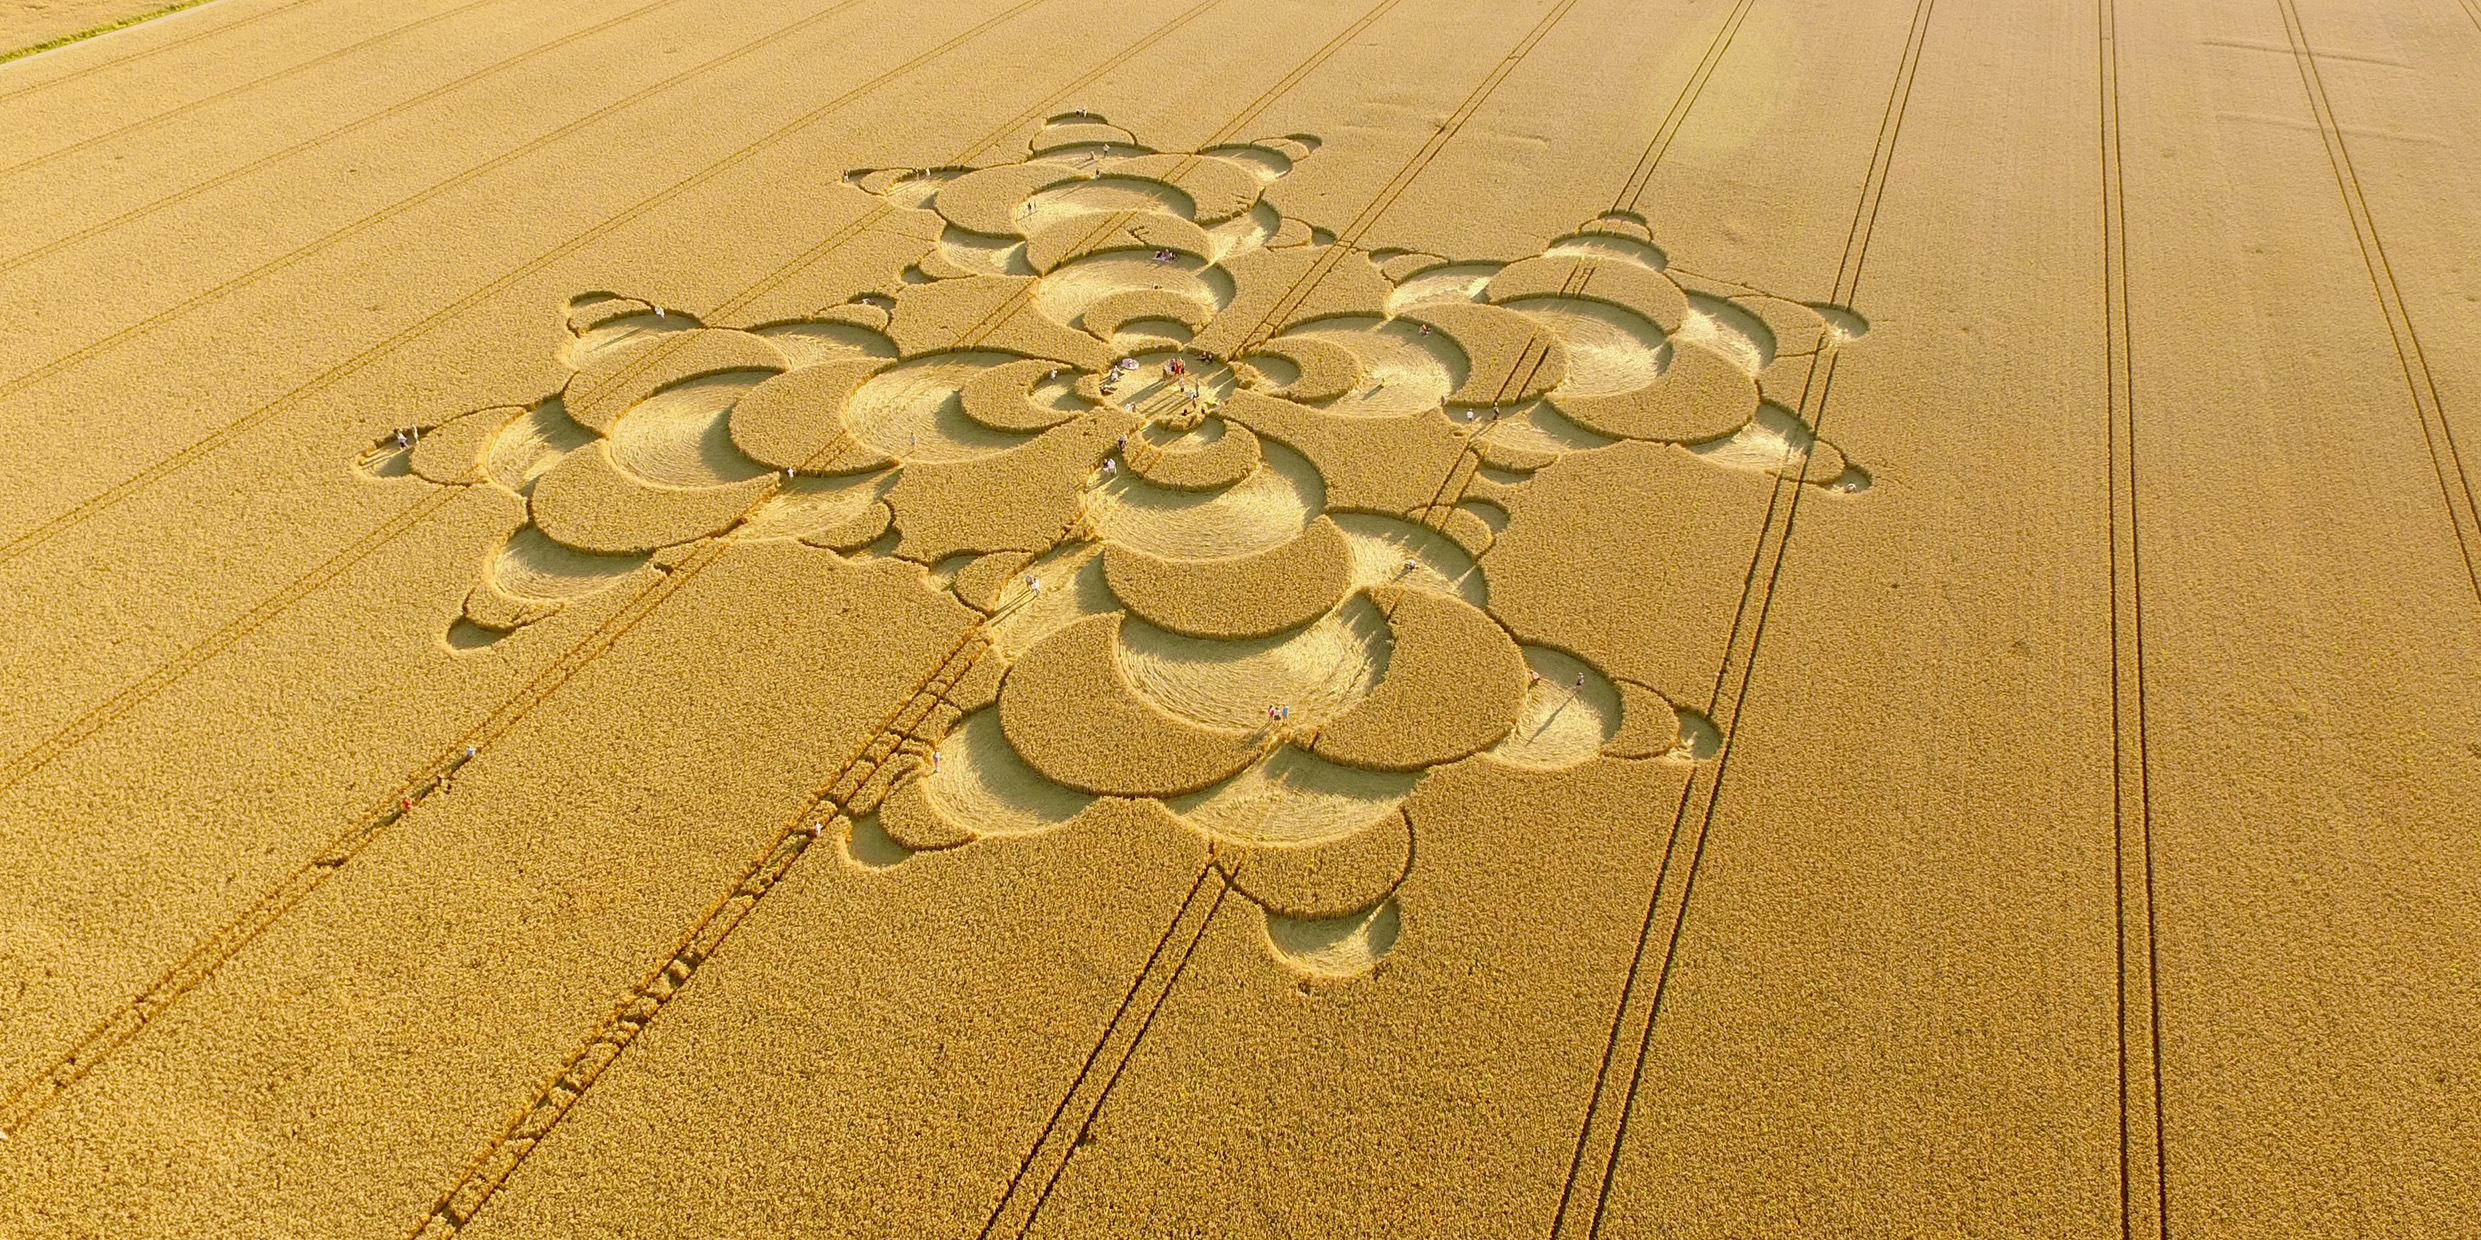 Aerial view of an intricate crop circle cut into a grain field